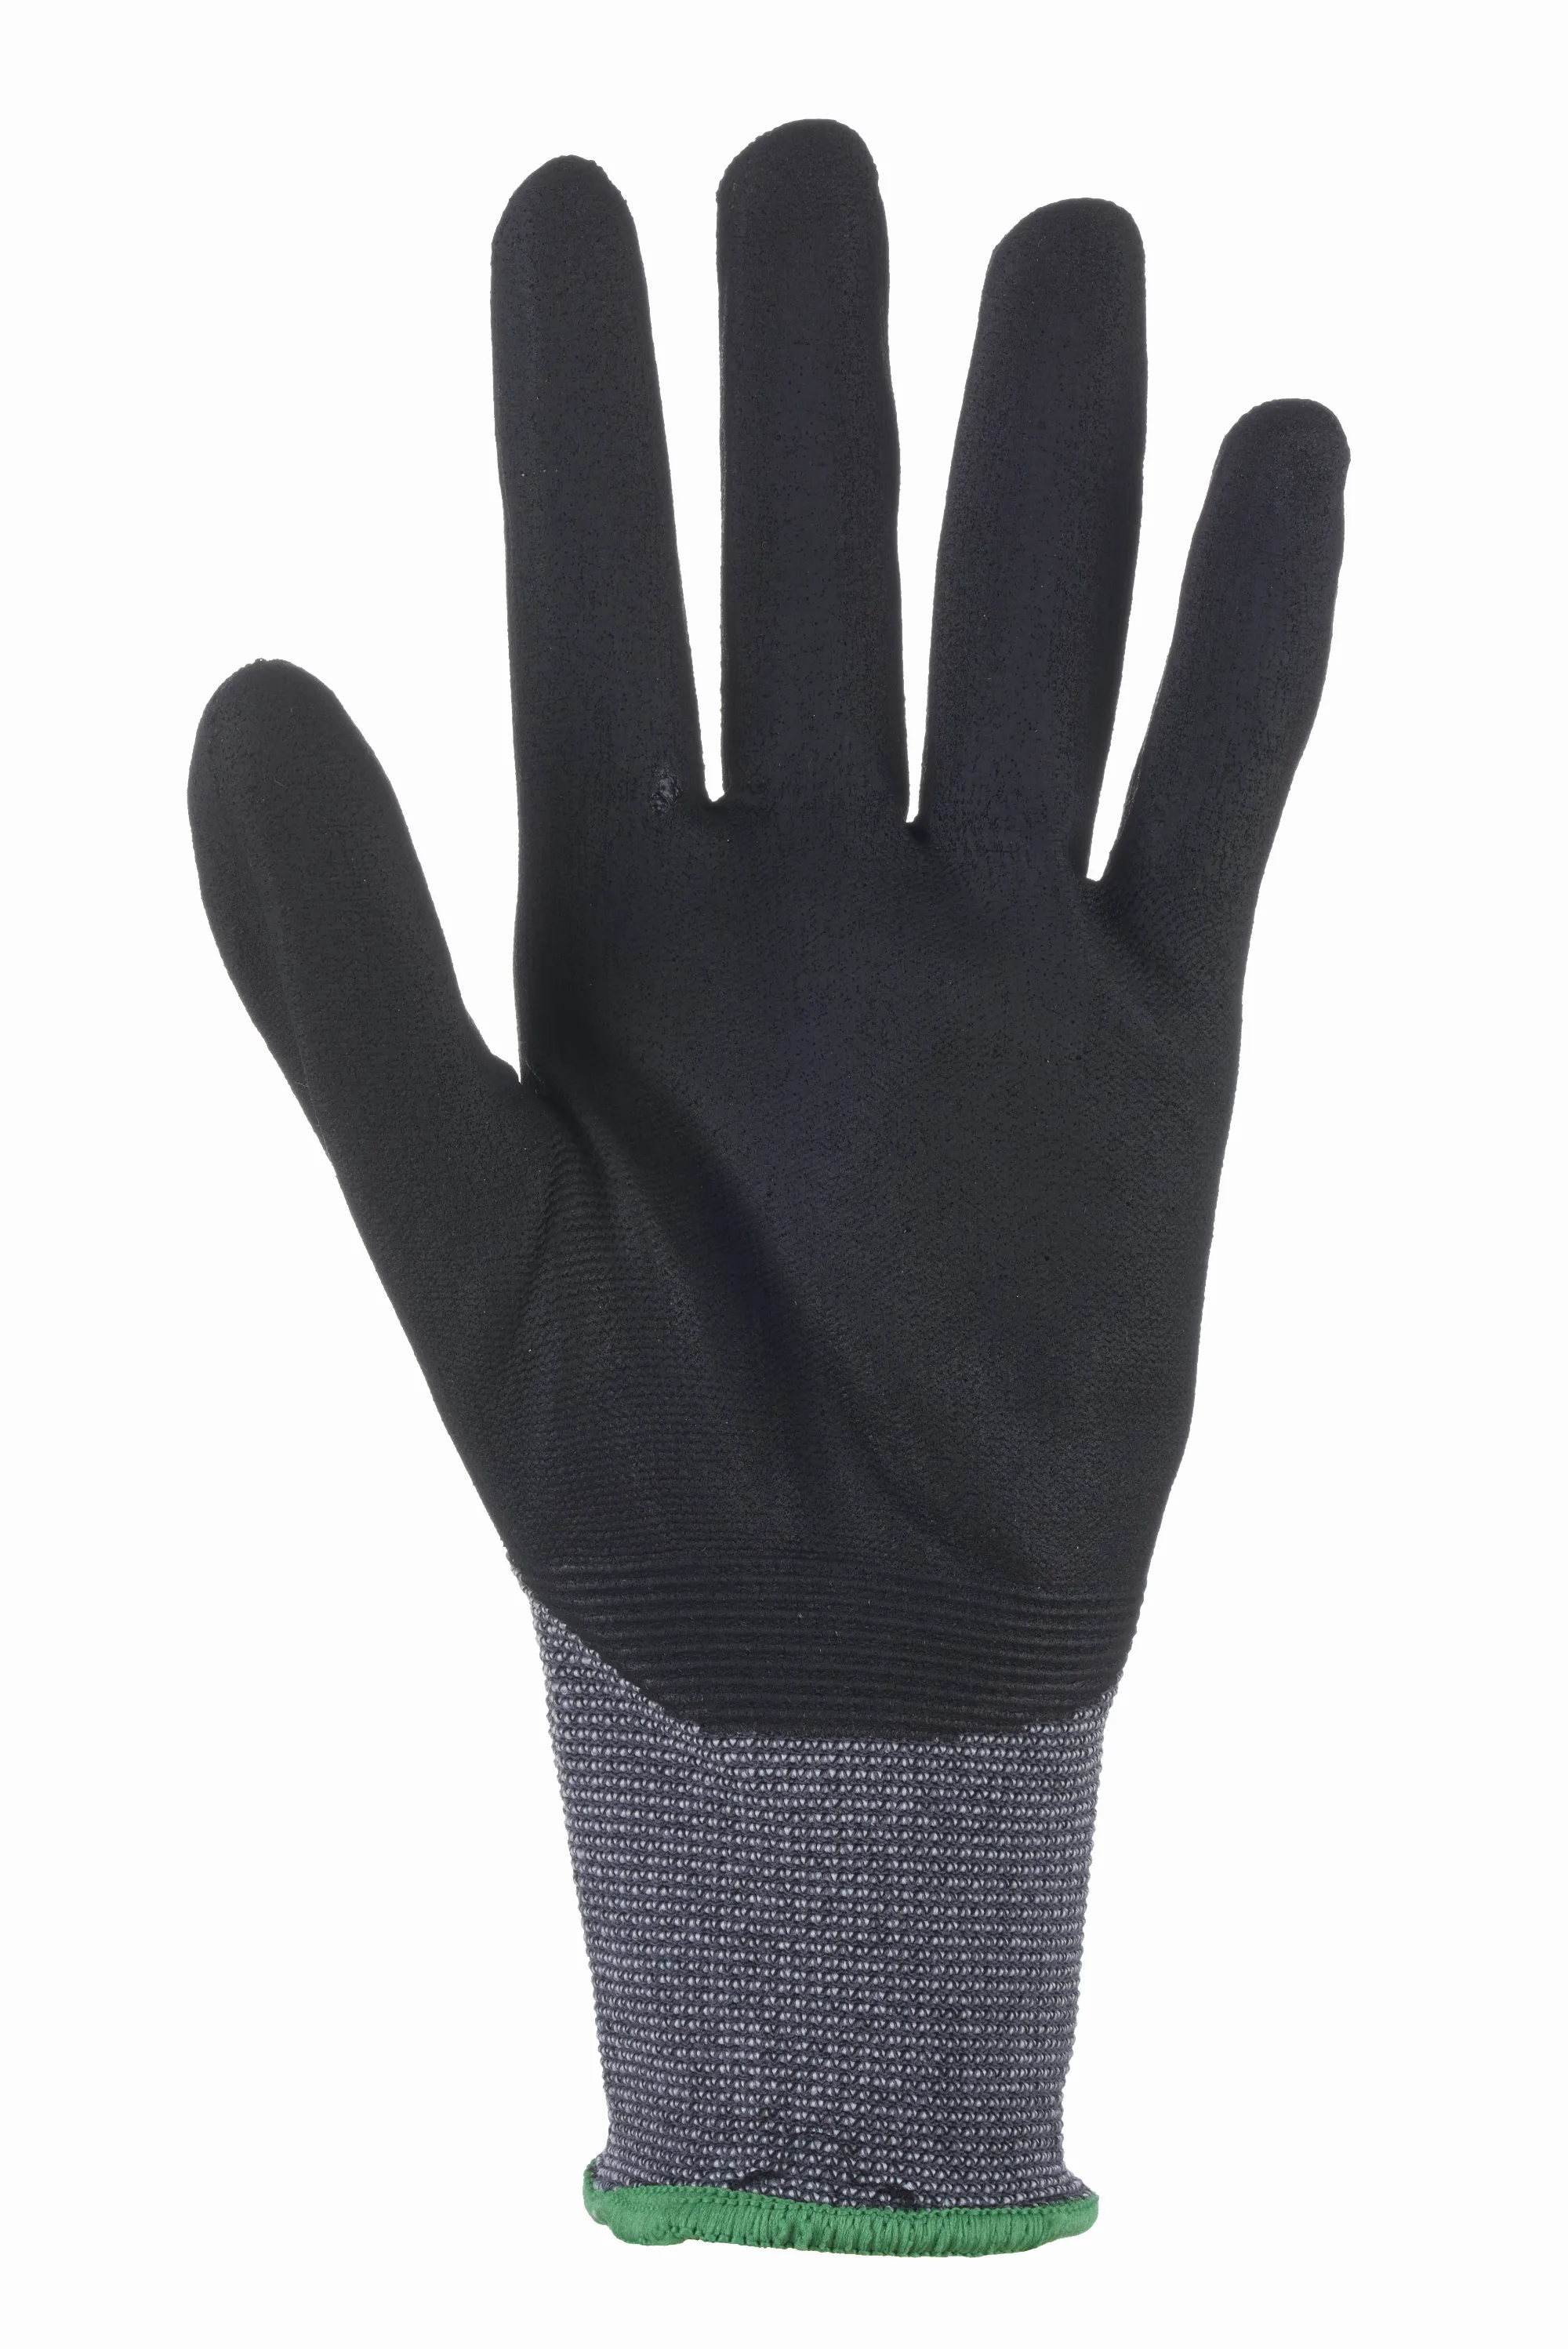 Handschuhe PORTWEST SG Grip15 Eco (12 Paar)